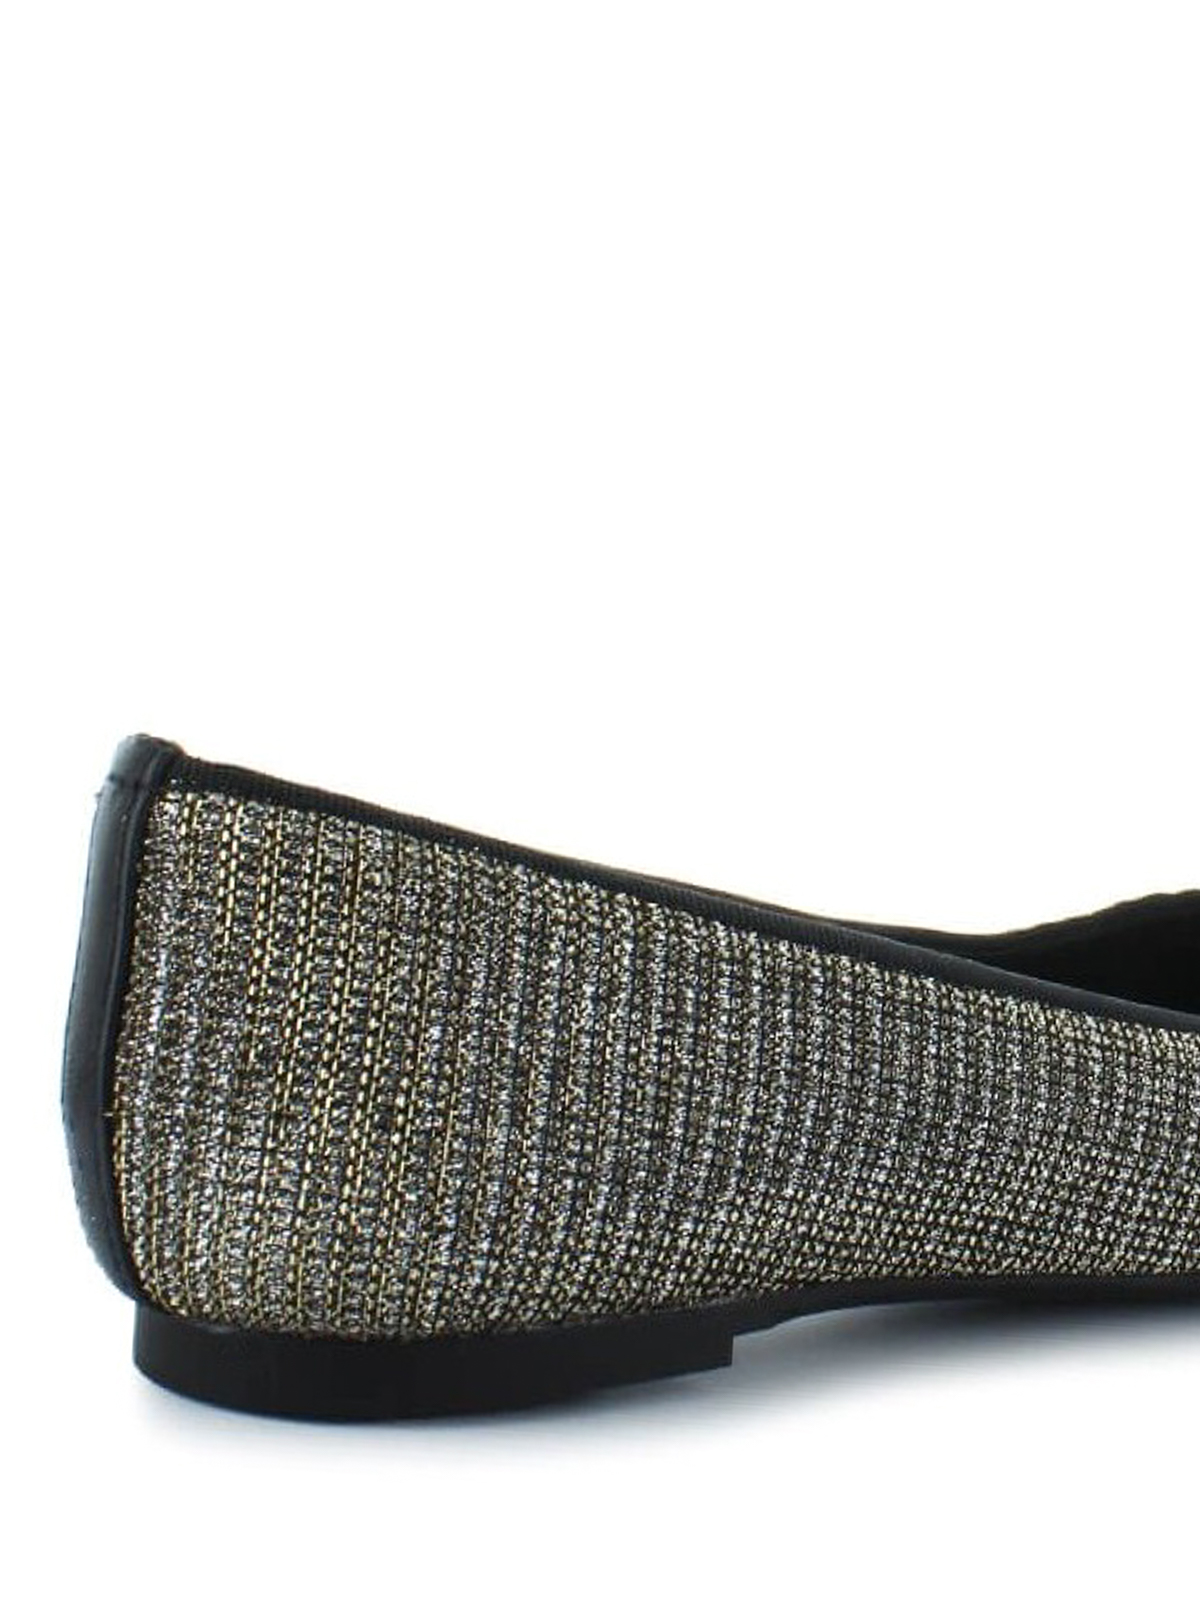 Flat shoes Michael Kors - Alice Ballet silver metallic fibre ballerinas -  40T8ALFP1D039